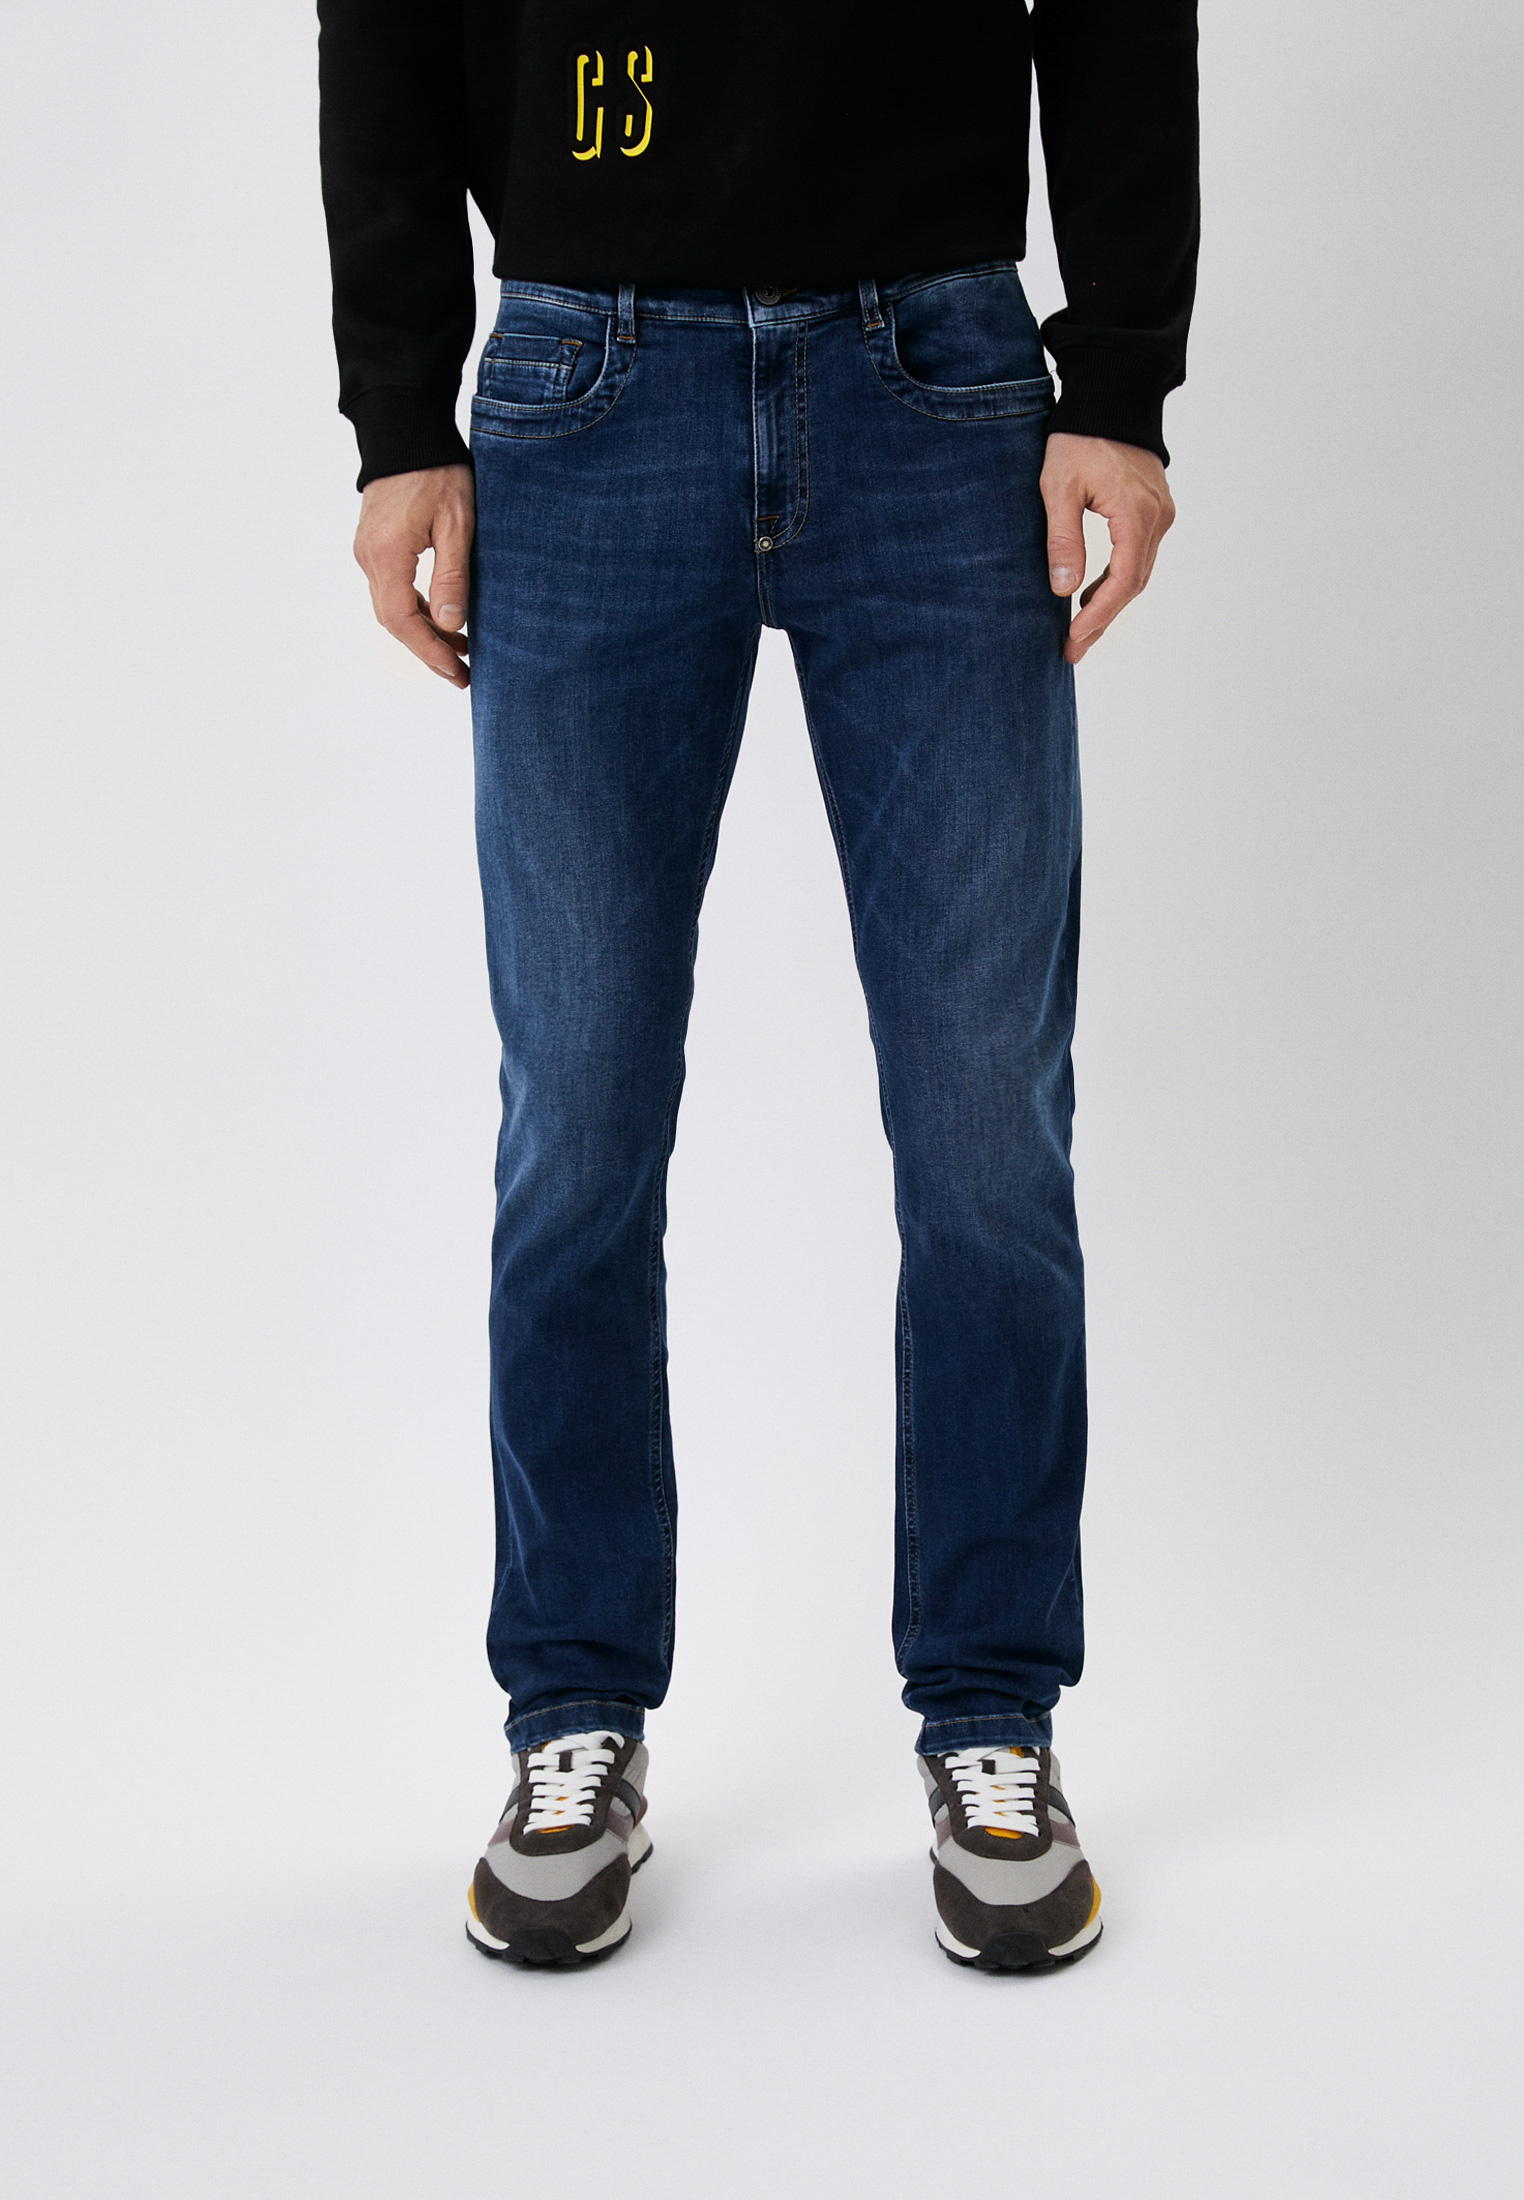 Мужские прямые джинсы Bikkembergs (Биккембергс) C Q 101 1B S 3511